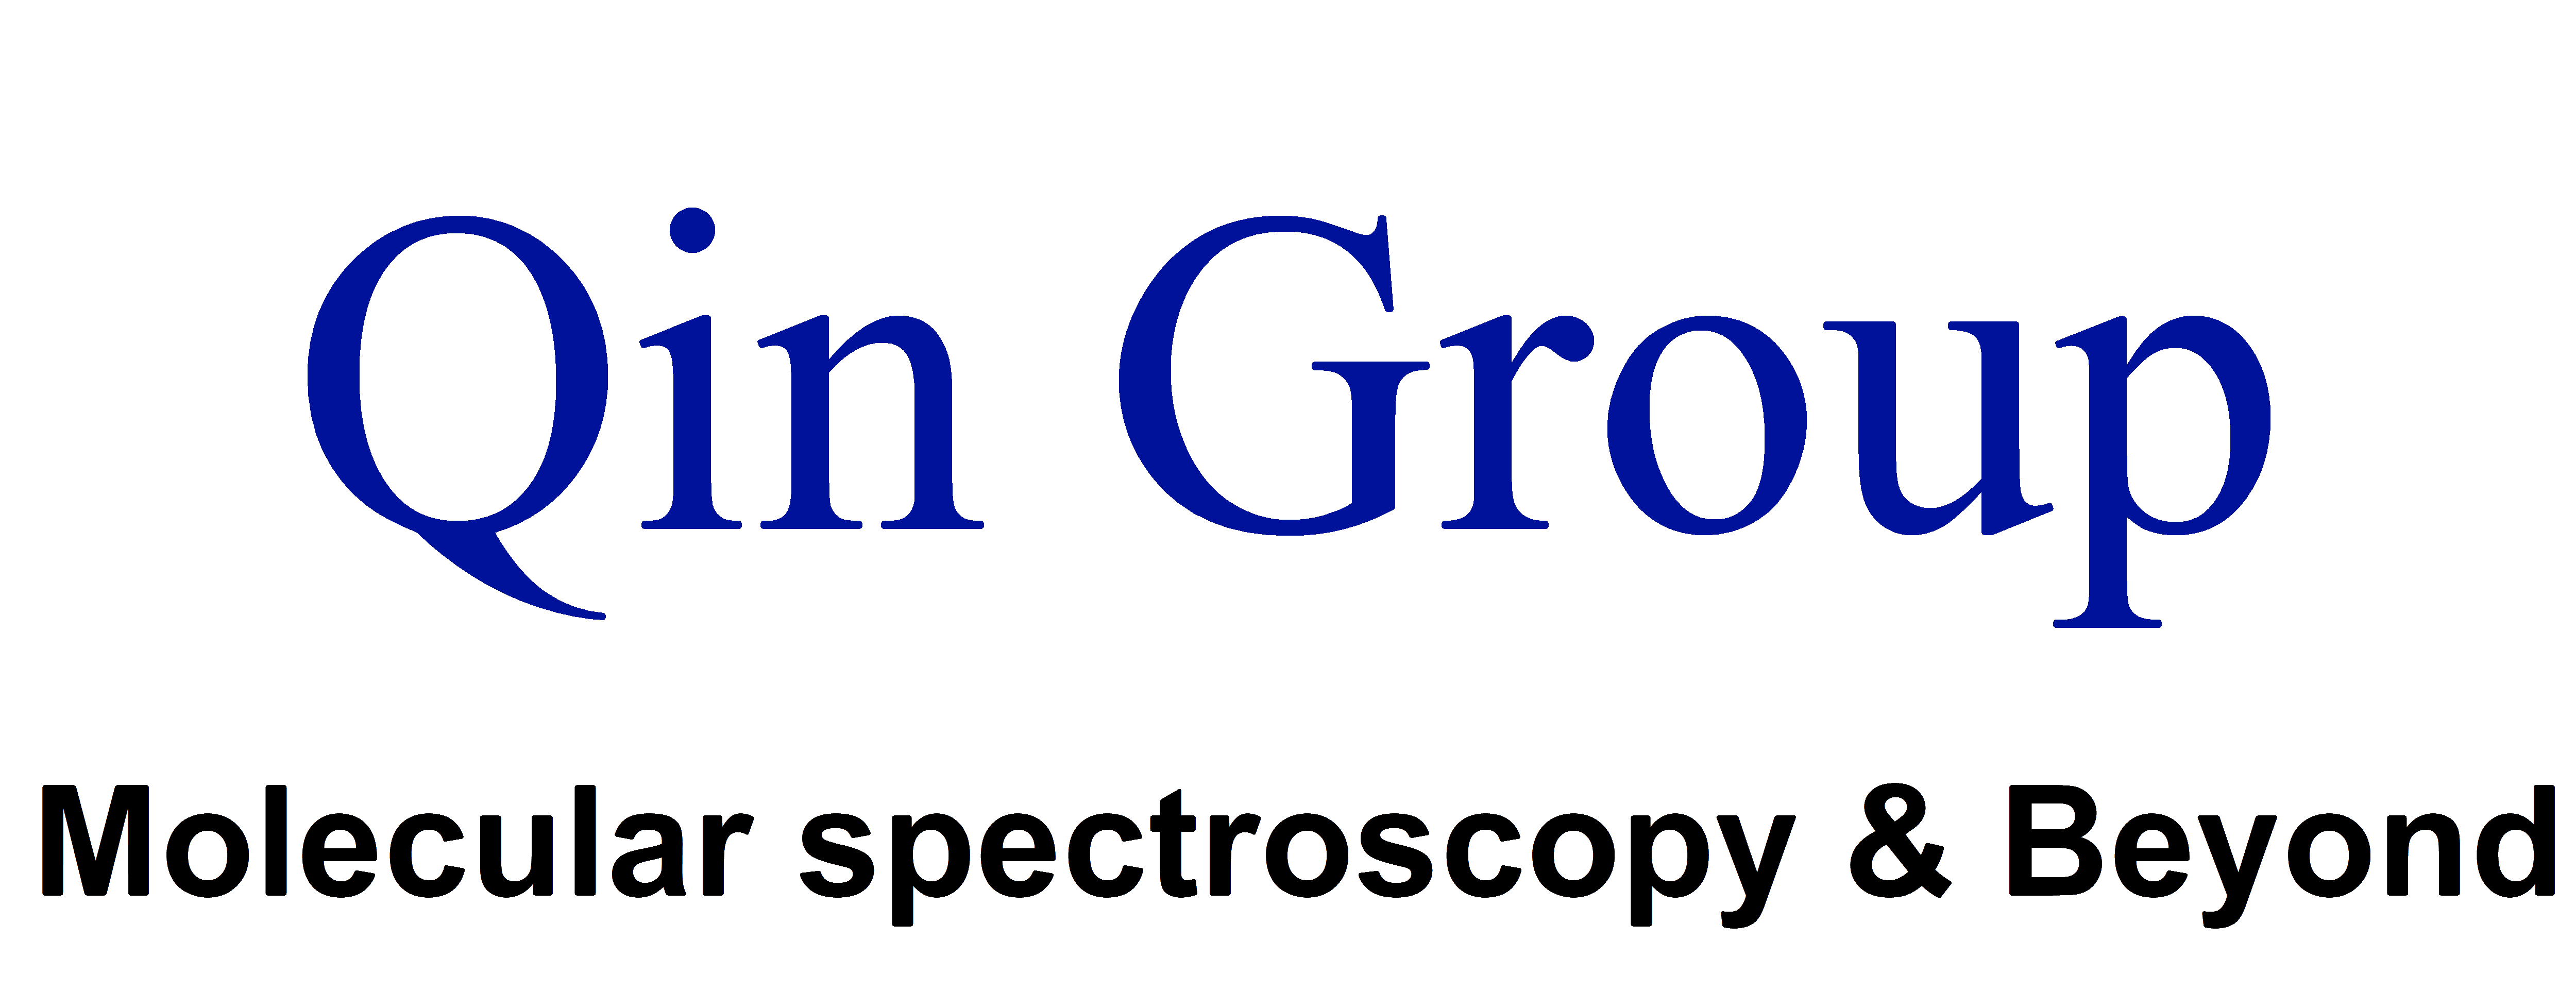 Qin Group
            Logo